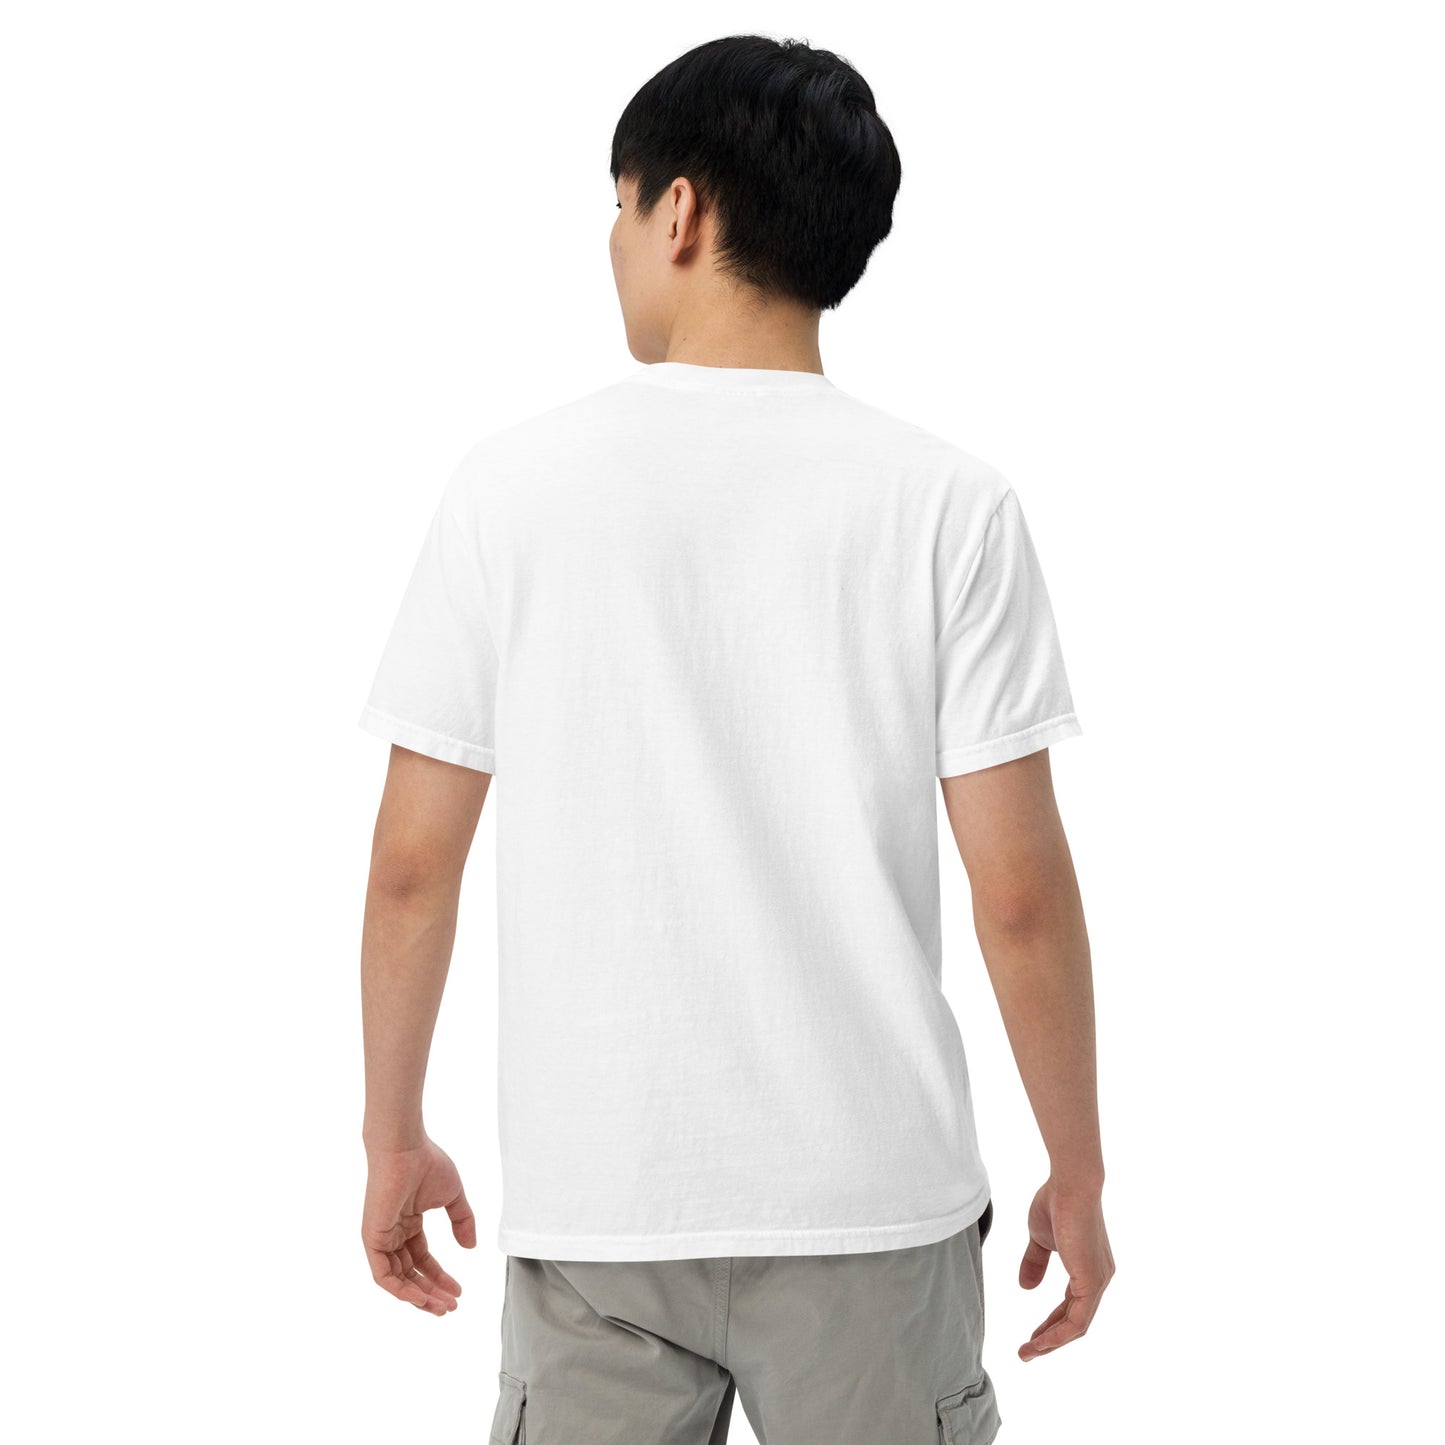 I (flip flop) ARL t-shirt - white